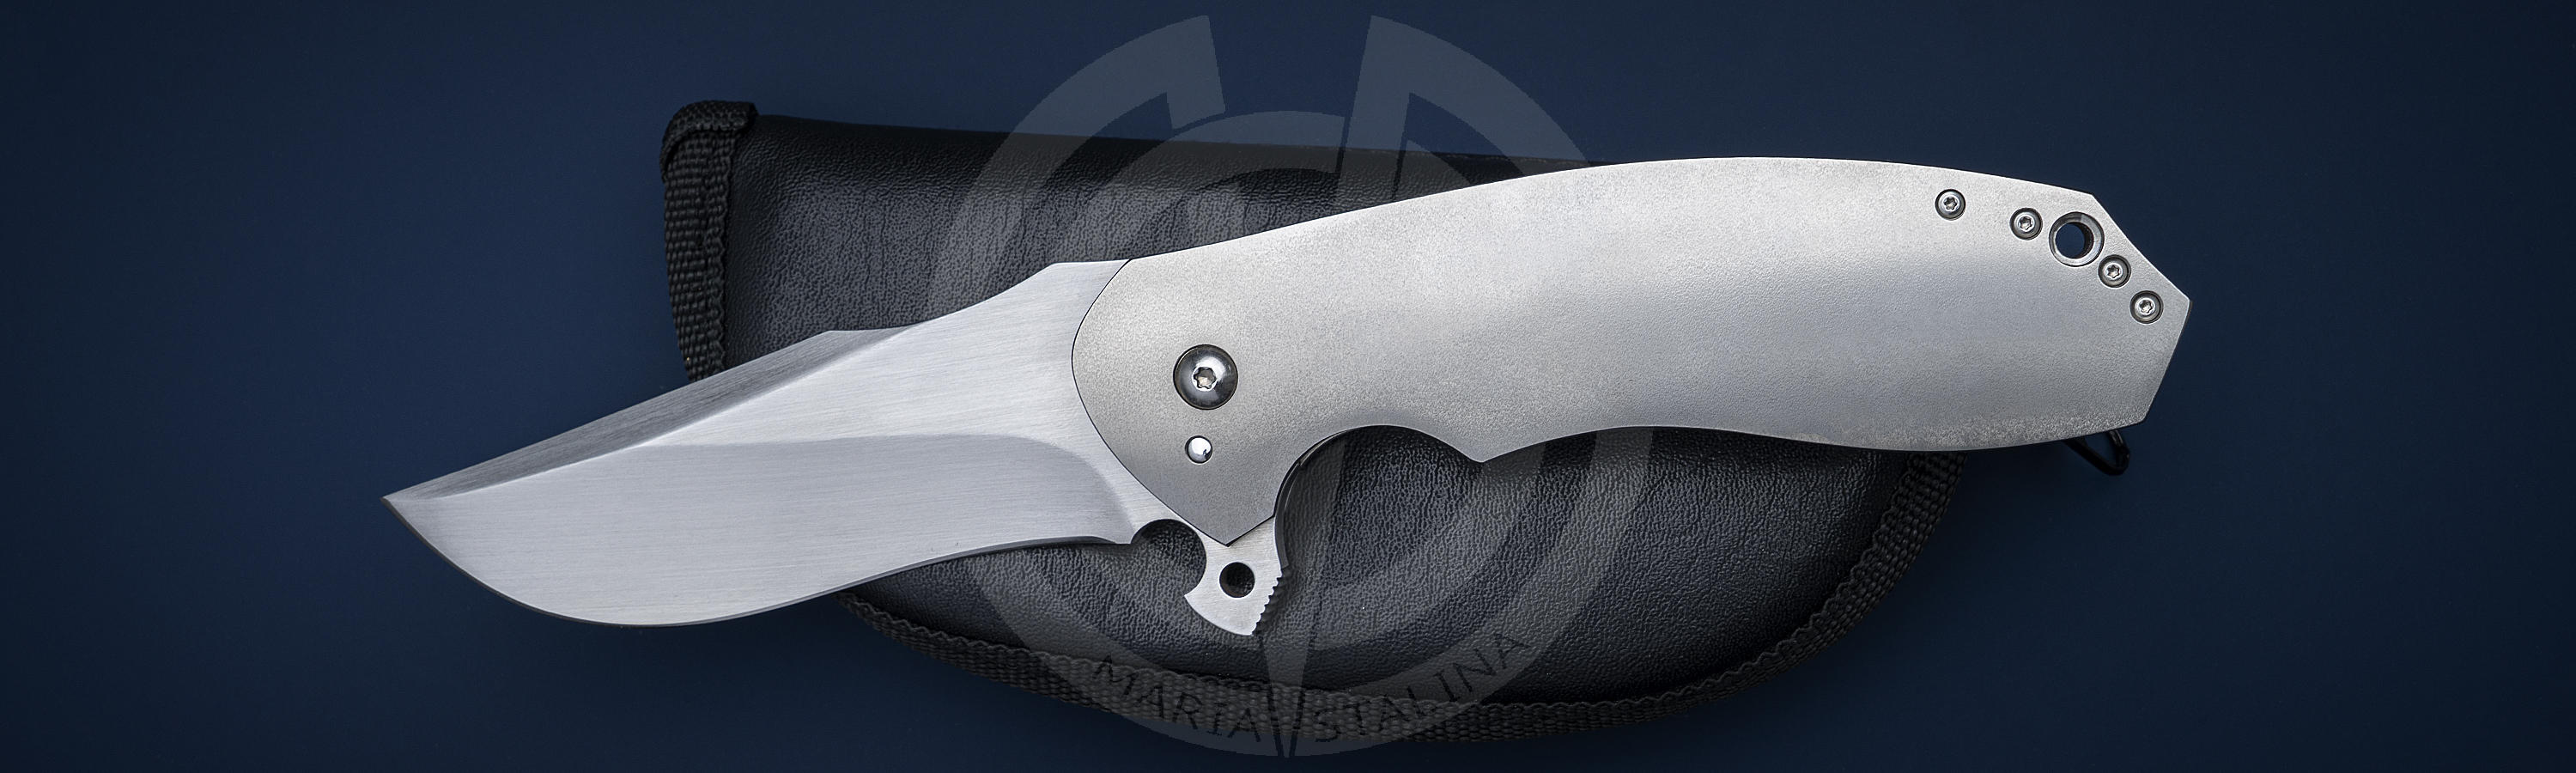 Designer Knife Prototype Raptor